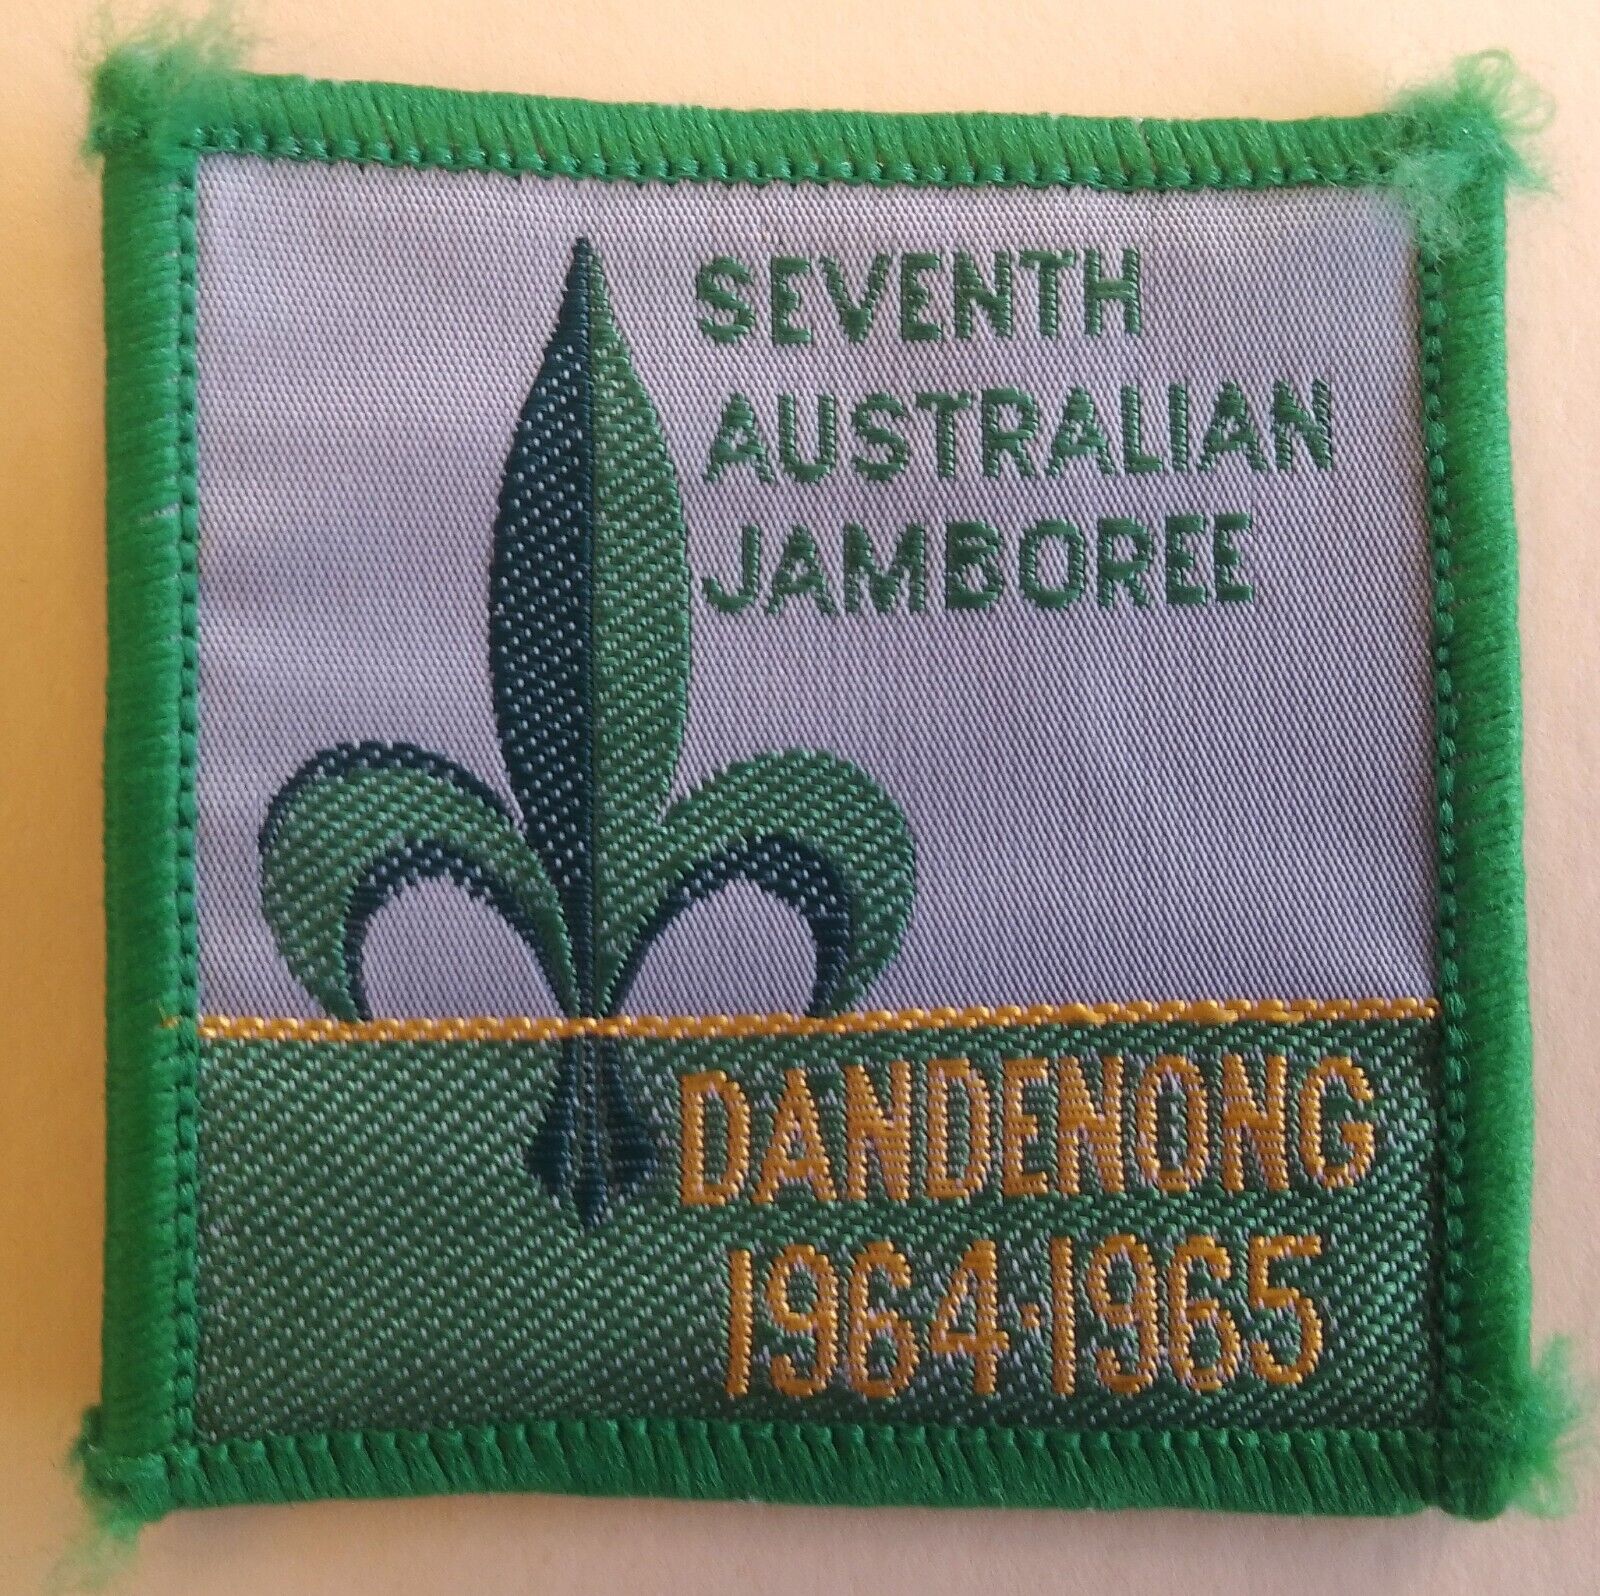 Reproduction 7th Australian Jamboree Dandenong VIC 1964/65 Scout Badge Patch.